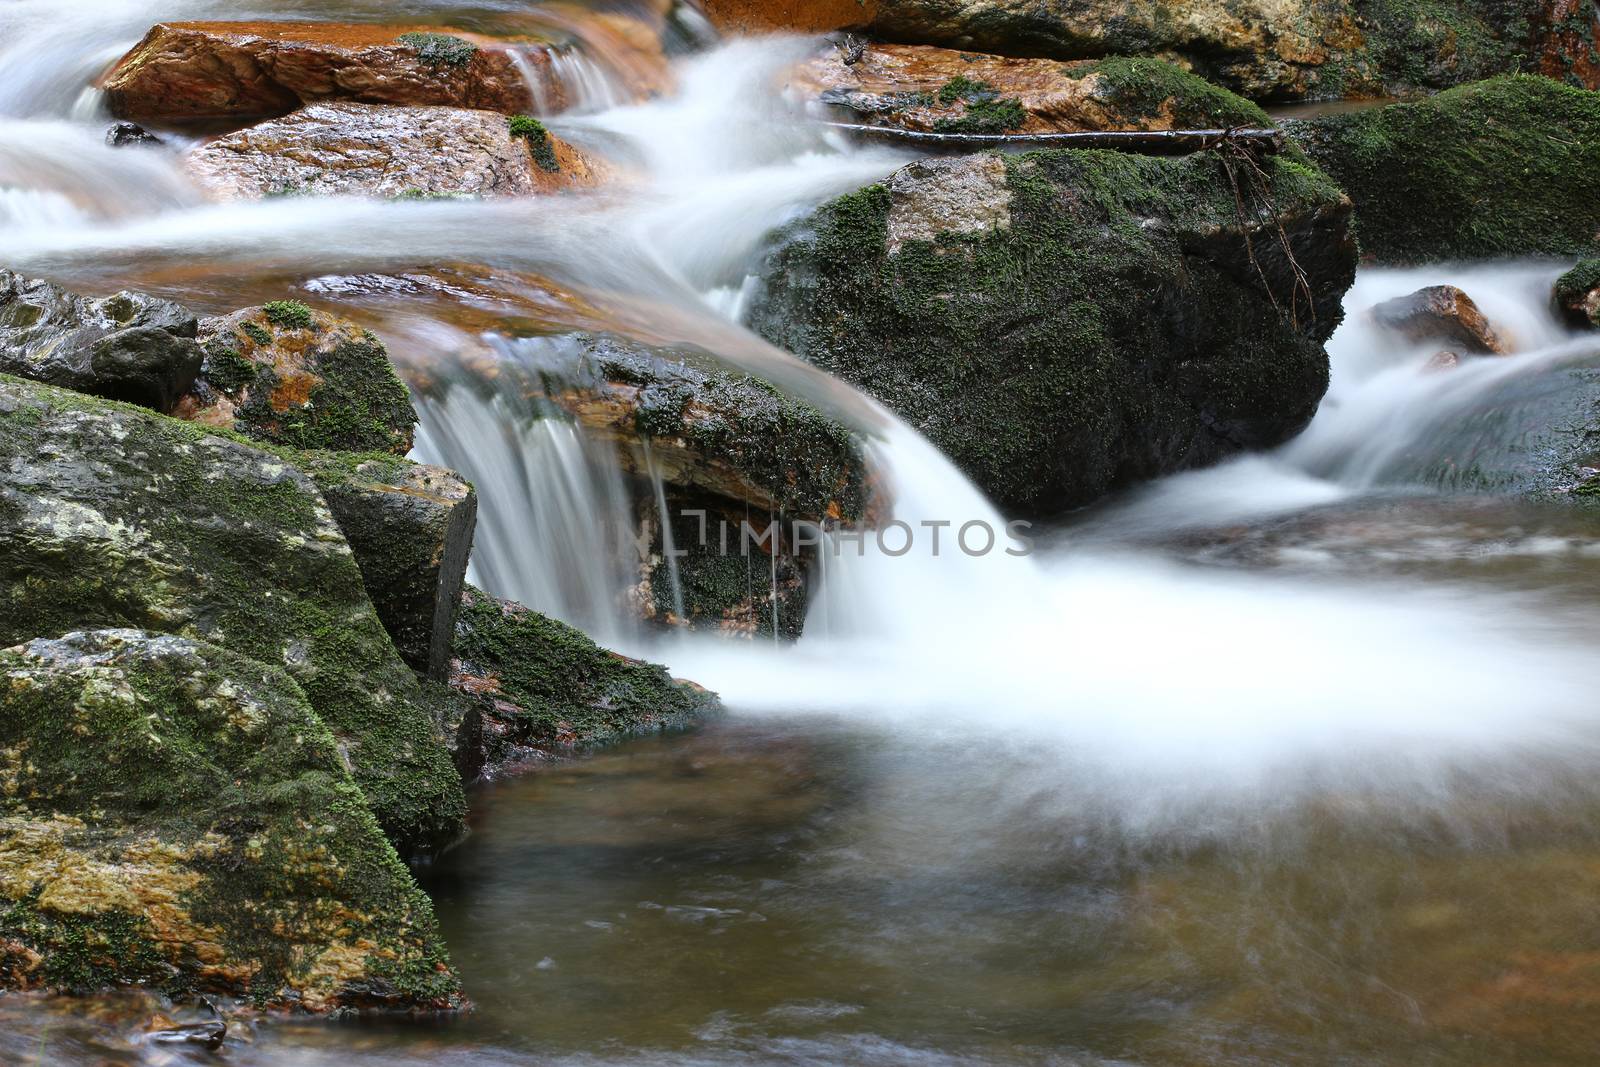 Water flowing over rocks - long exposure, Bila Opava, Czech republic